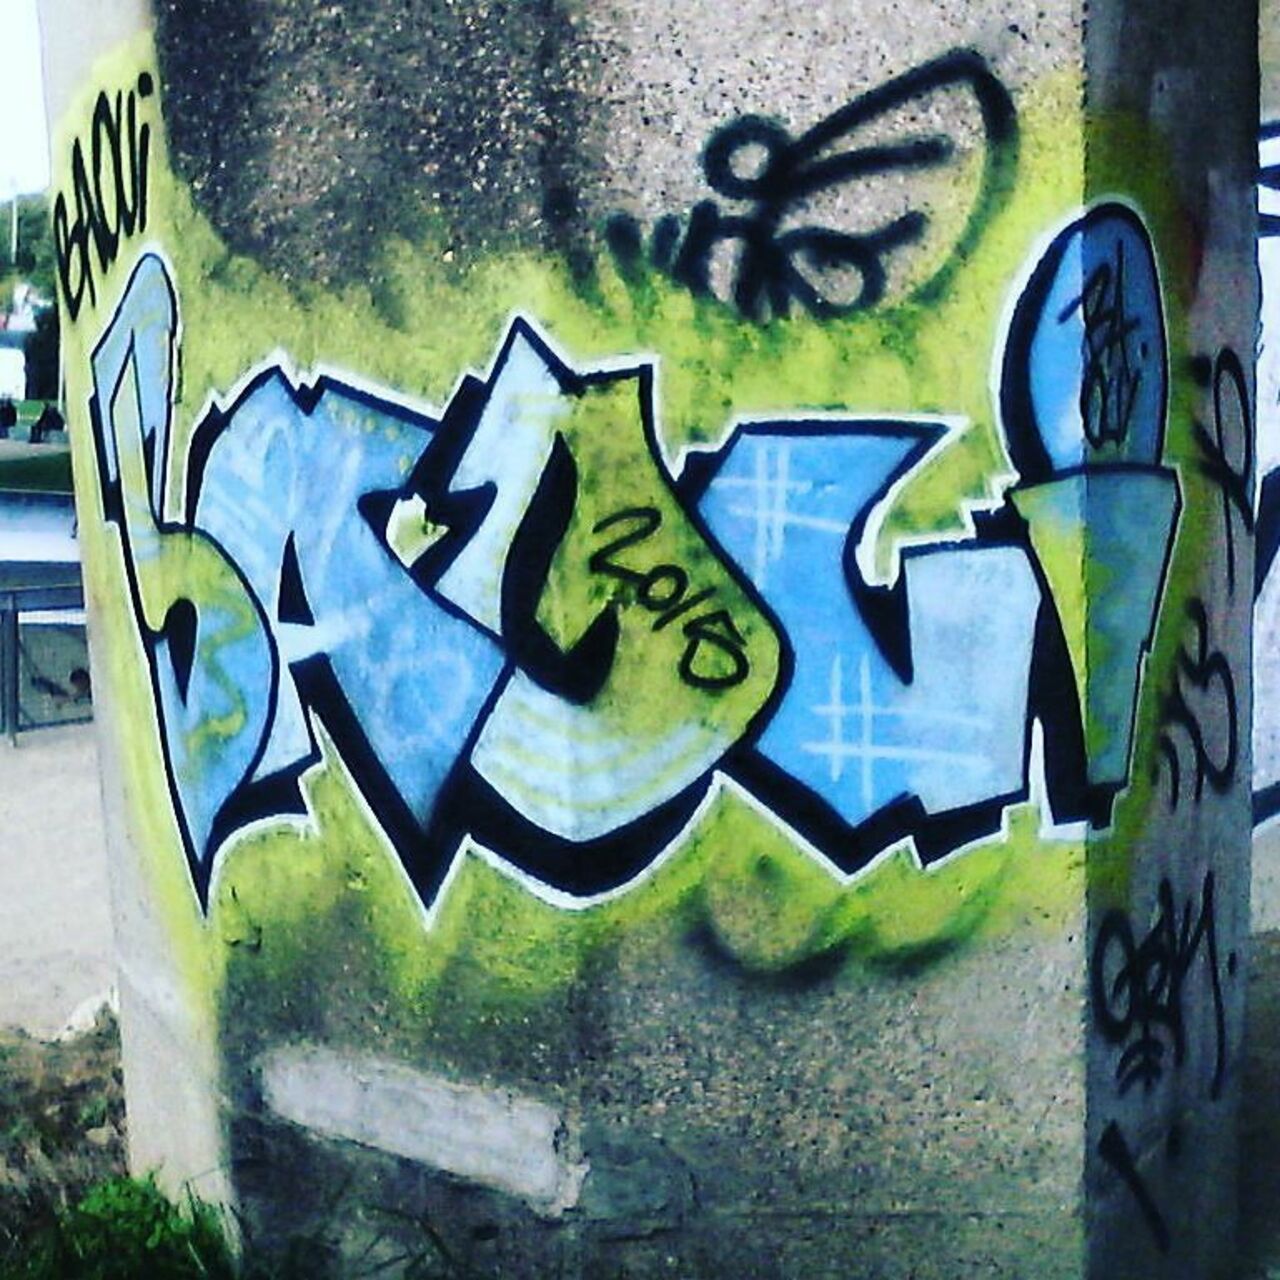 #baoui #streetart # #streetartparis #spraypaint #graff #graffiti #mur #wallpainting #wall #g6kolor #urbanart #urban… https://t.co/B4tSTGydji